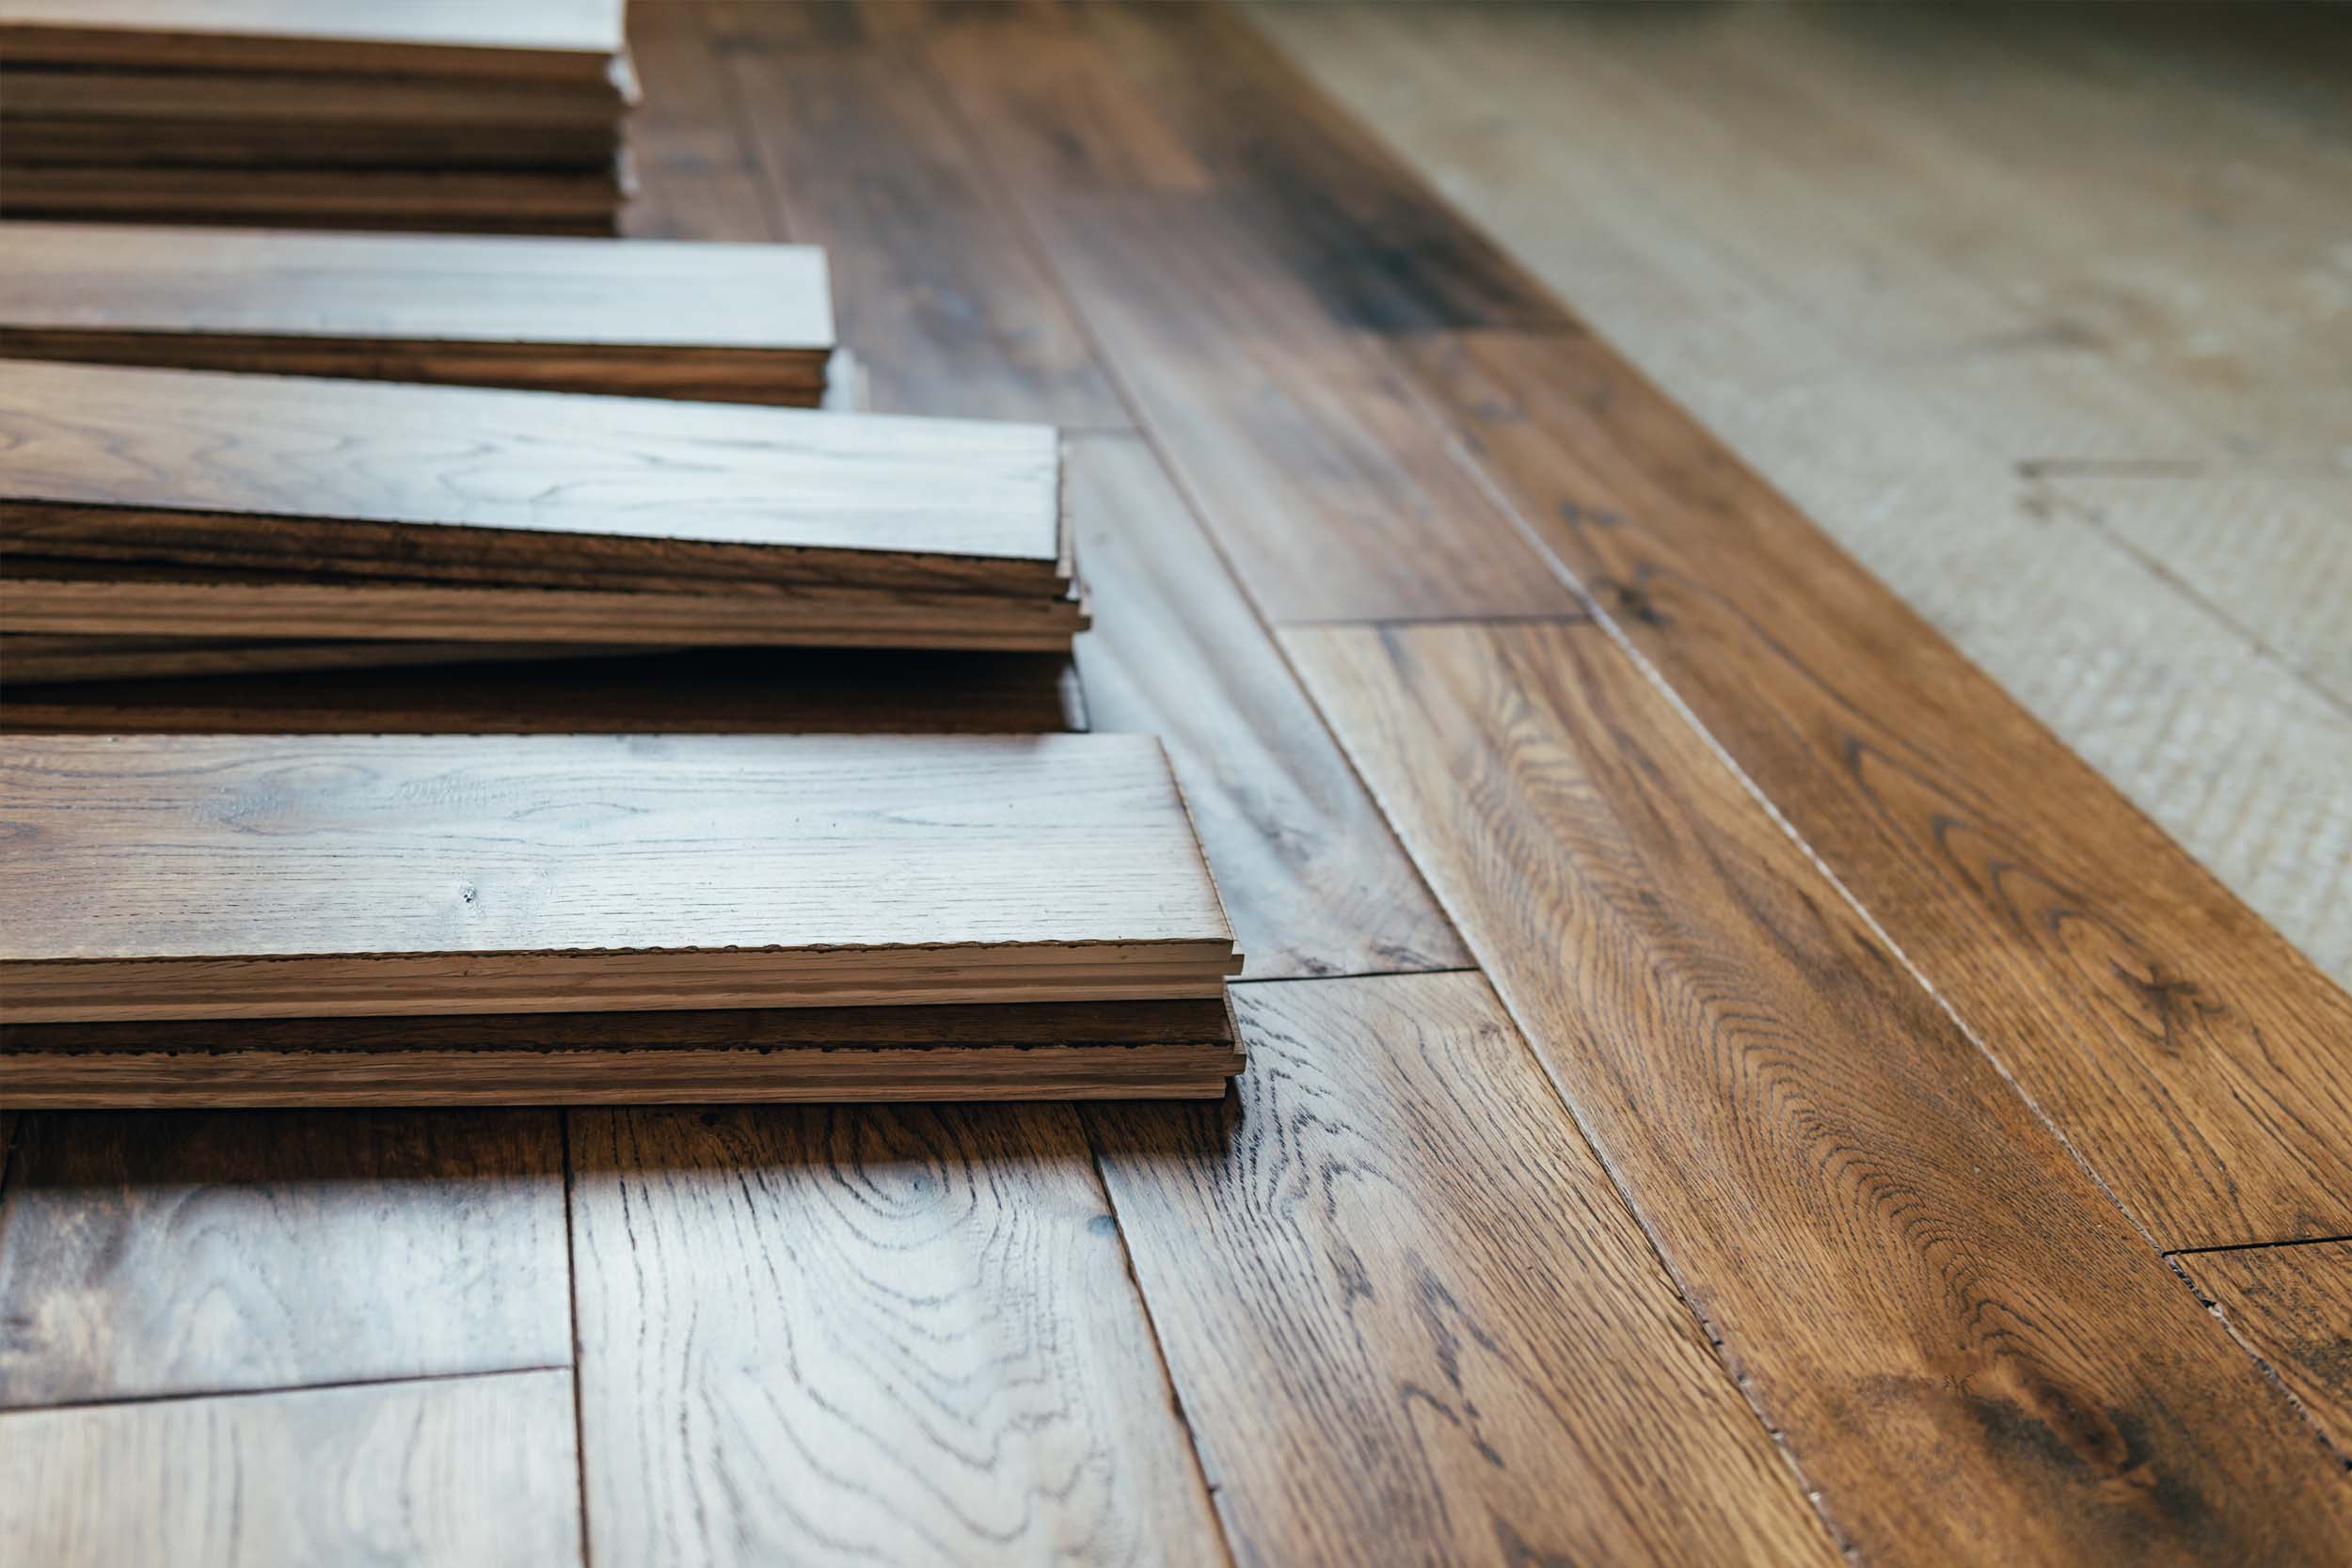 flooring wood